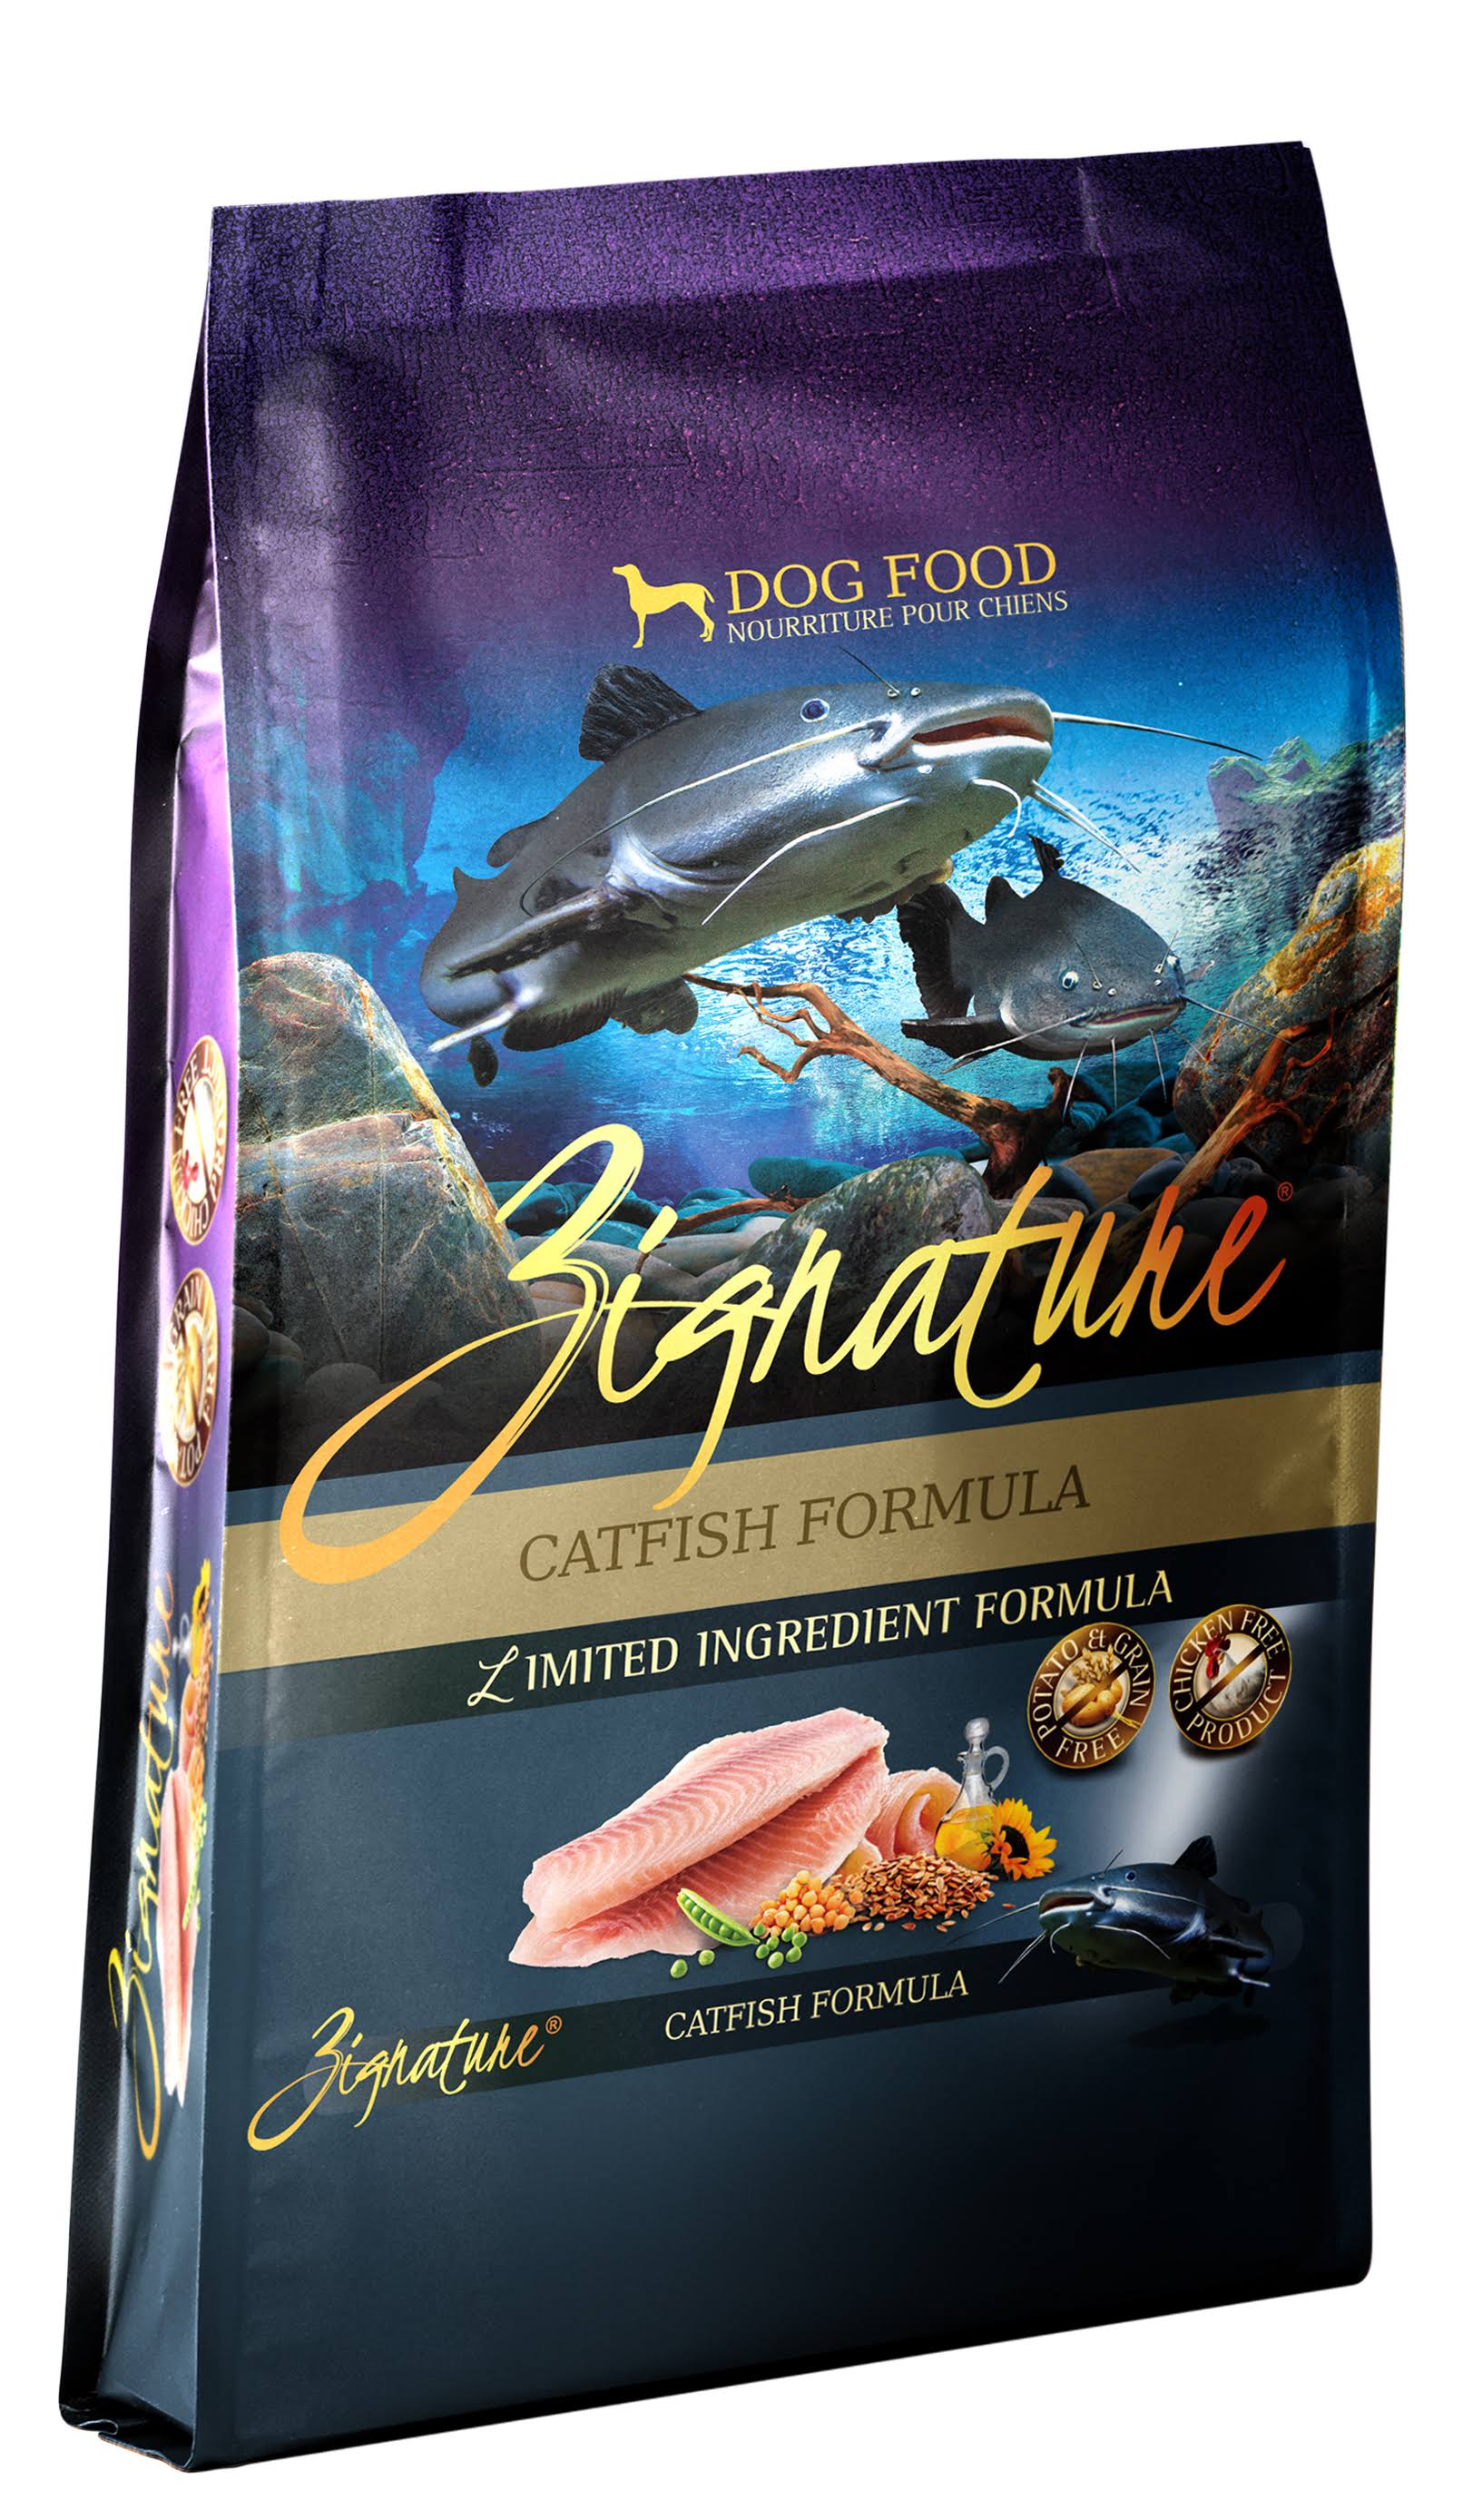 Zignature Catfish Formula Dog Food [25lb]